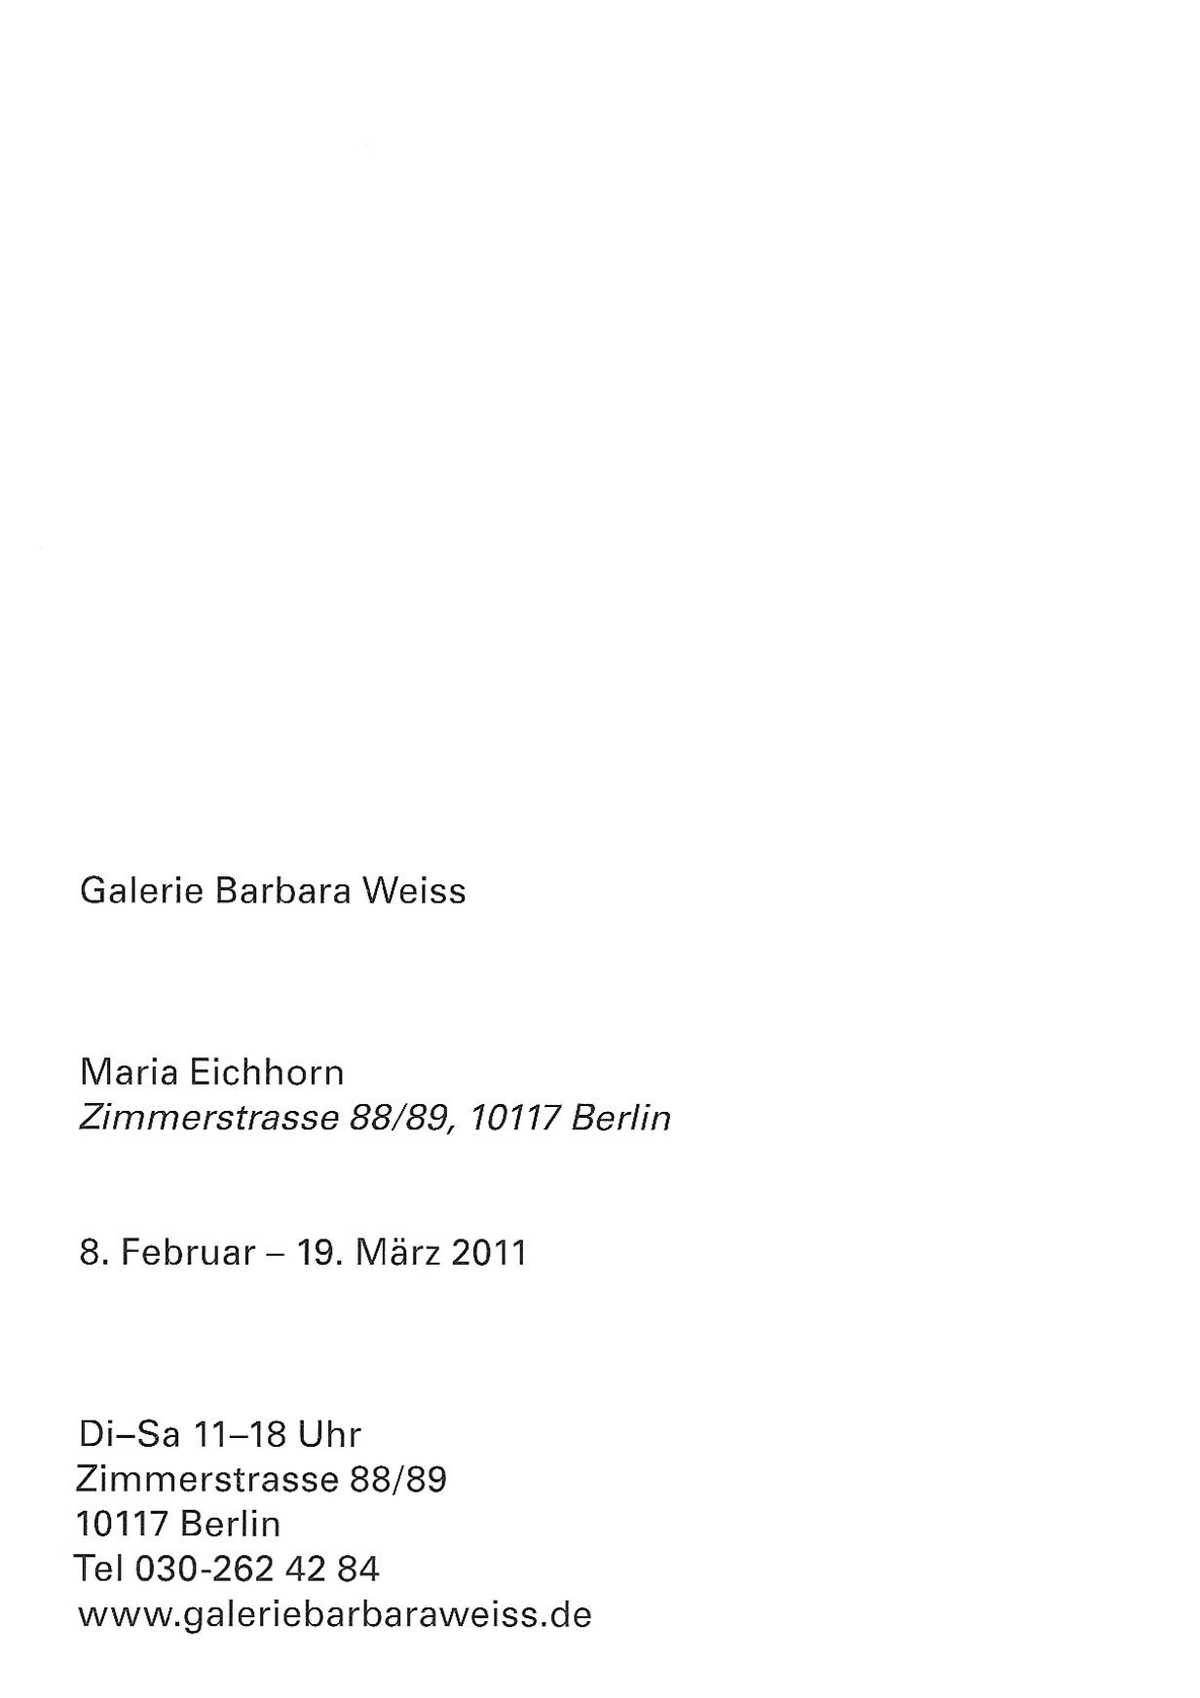 Maria Eichhorn: Zimmerstraße 88/89, 10117 Berlin. February 8 – March 19, 2011